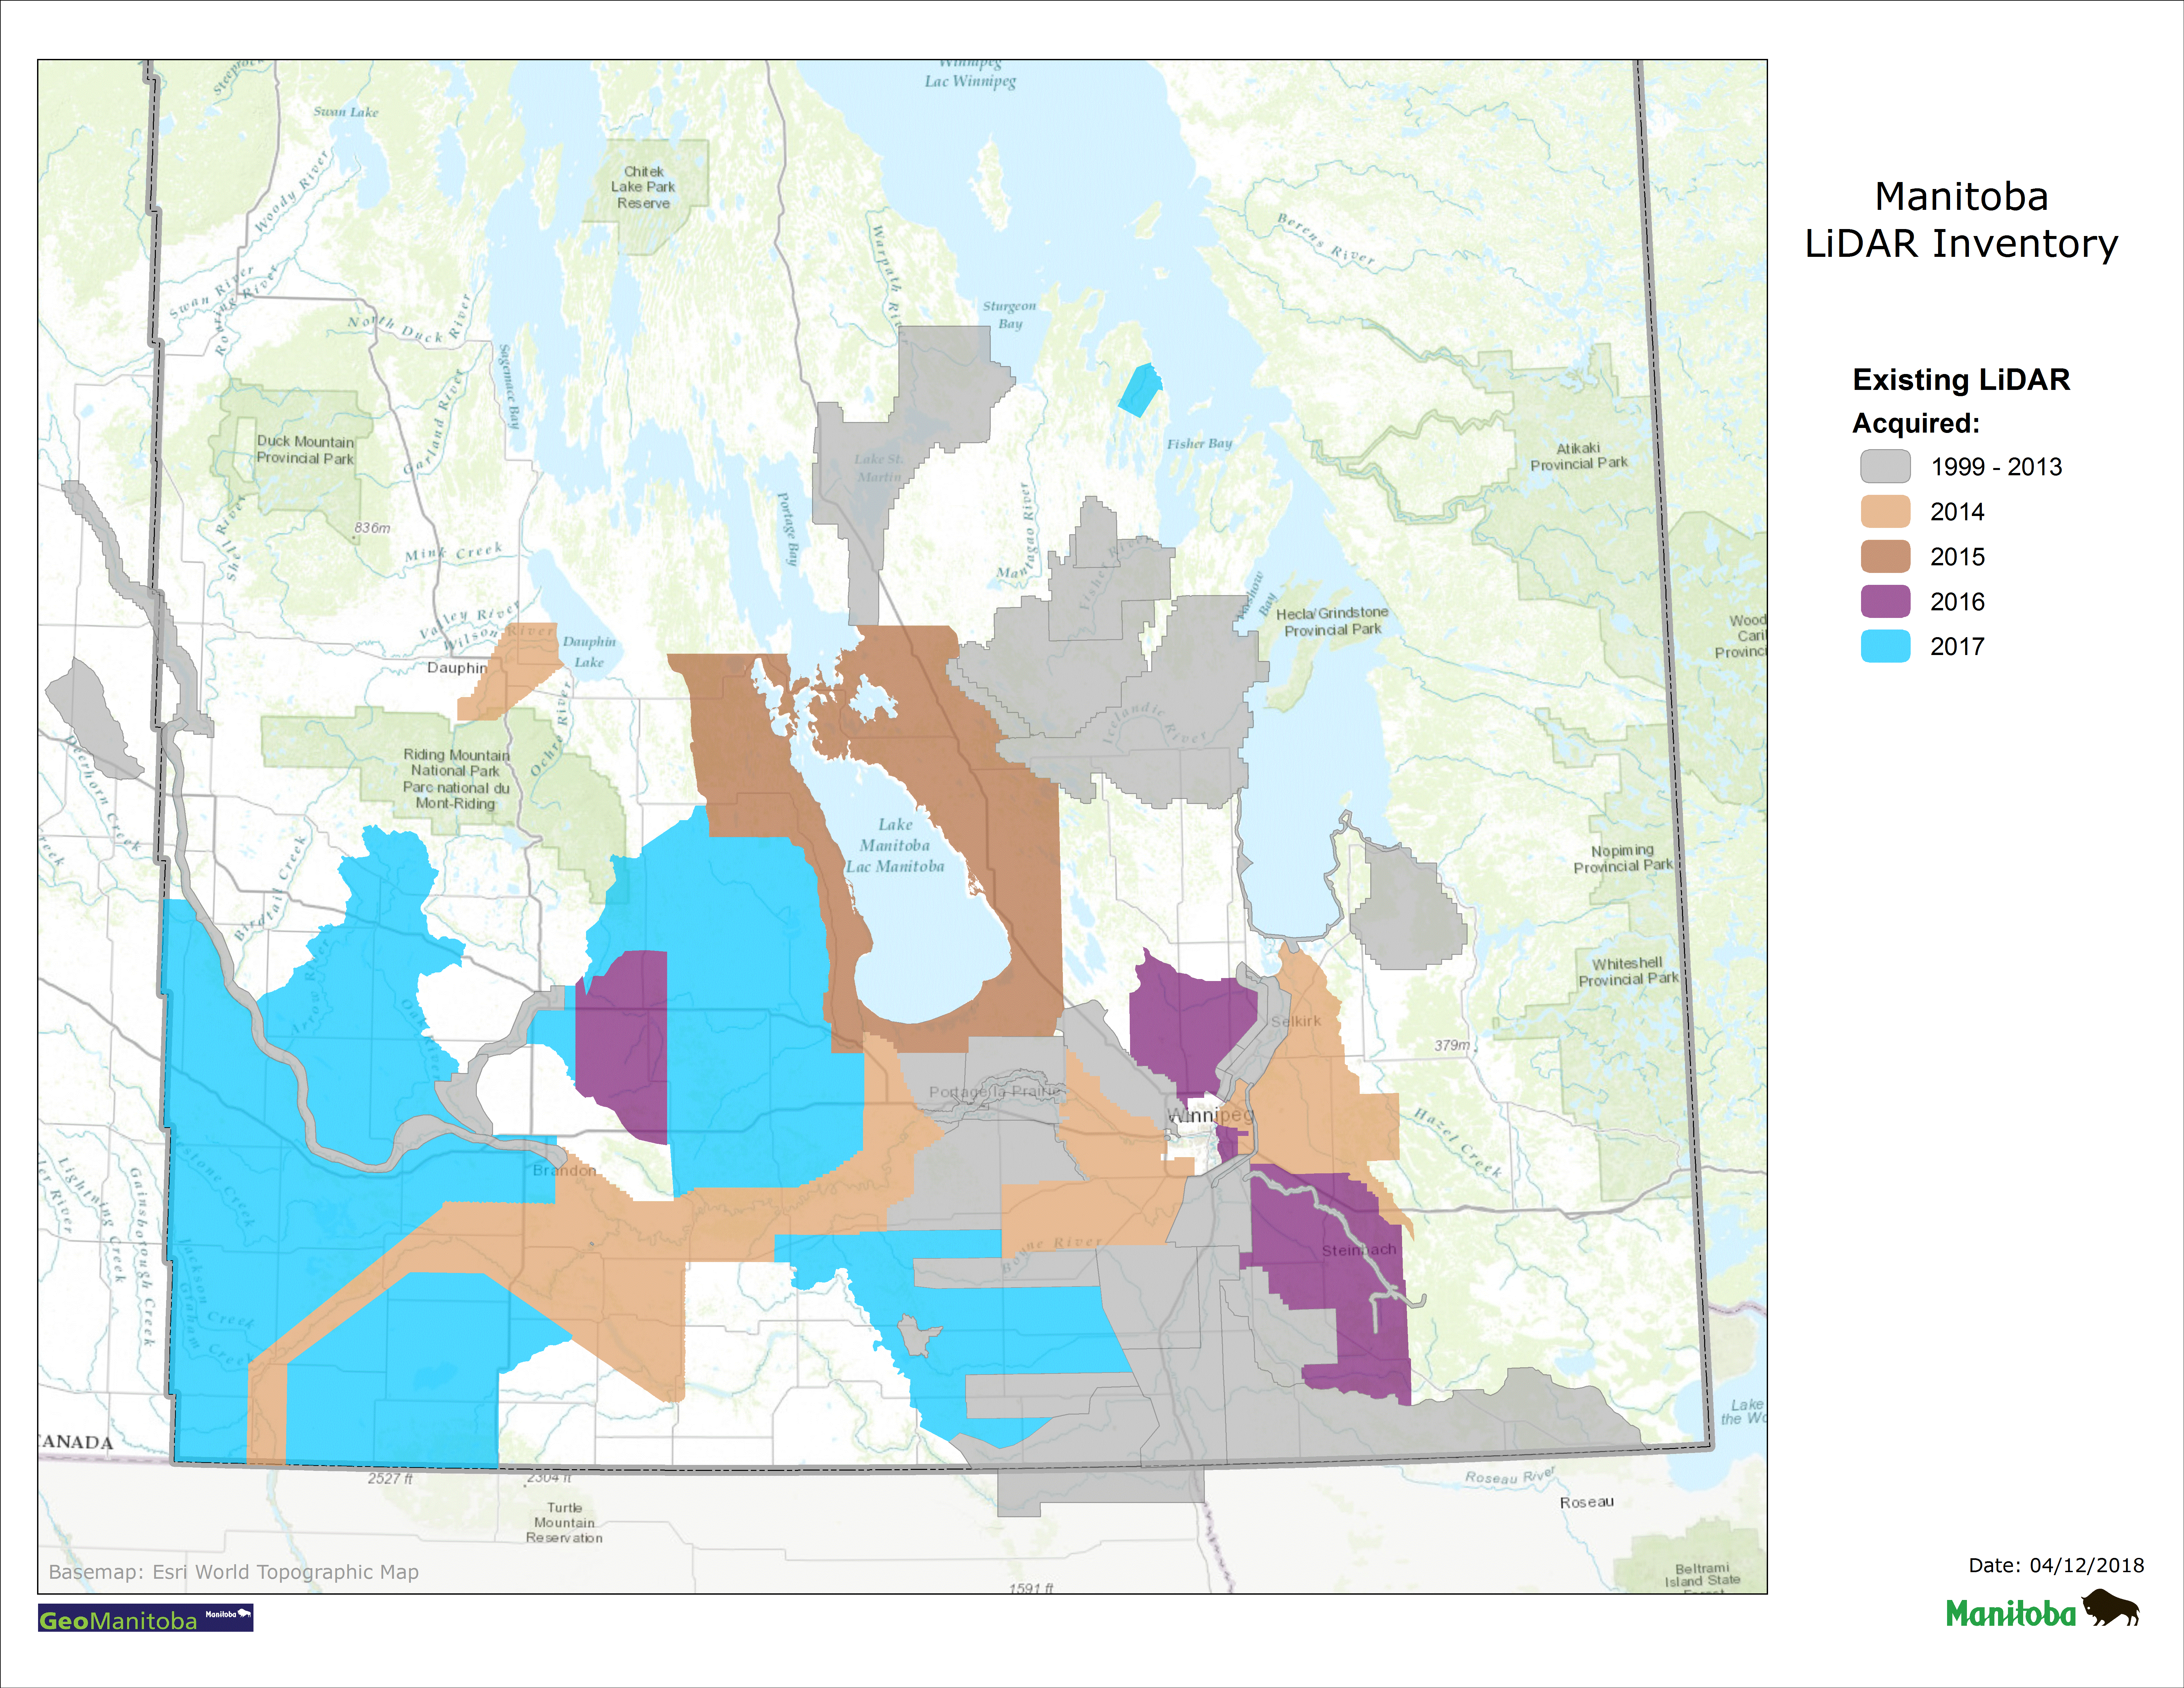 Manitoba LiDAR Data Coverage